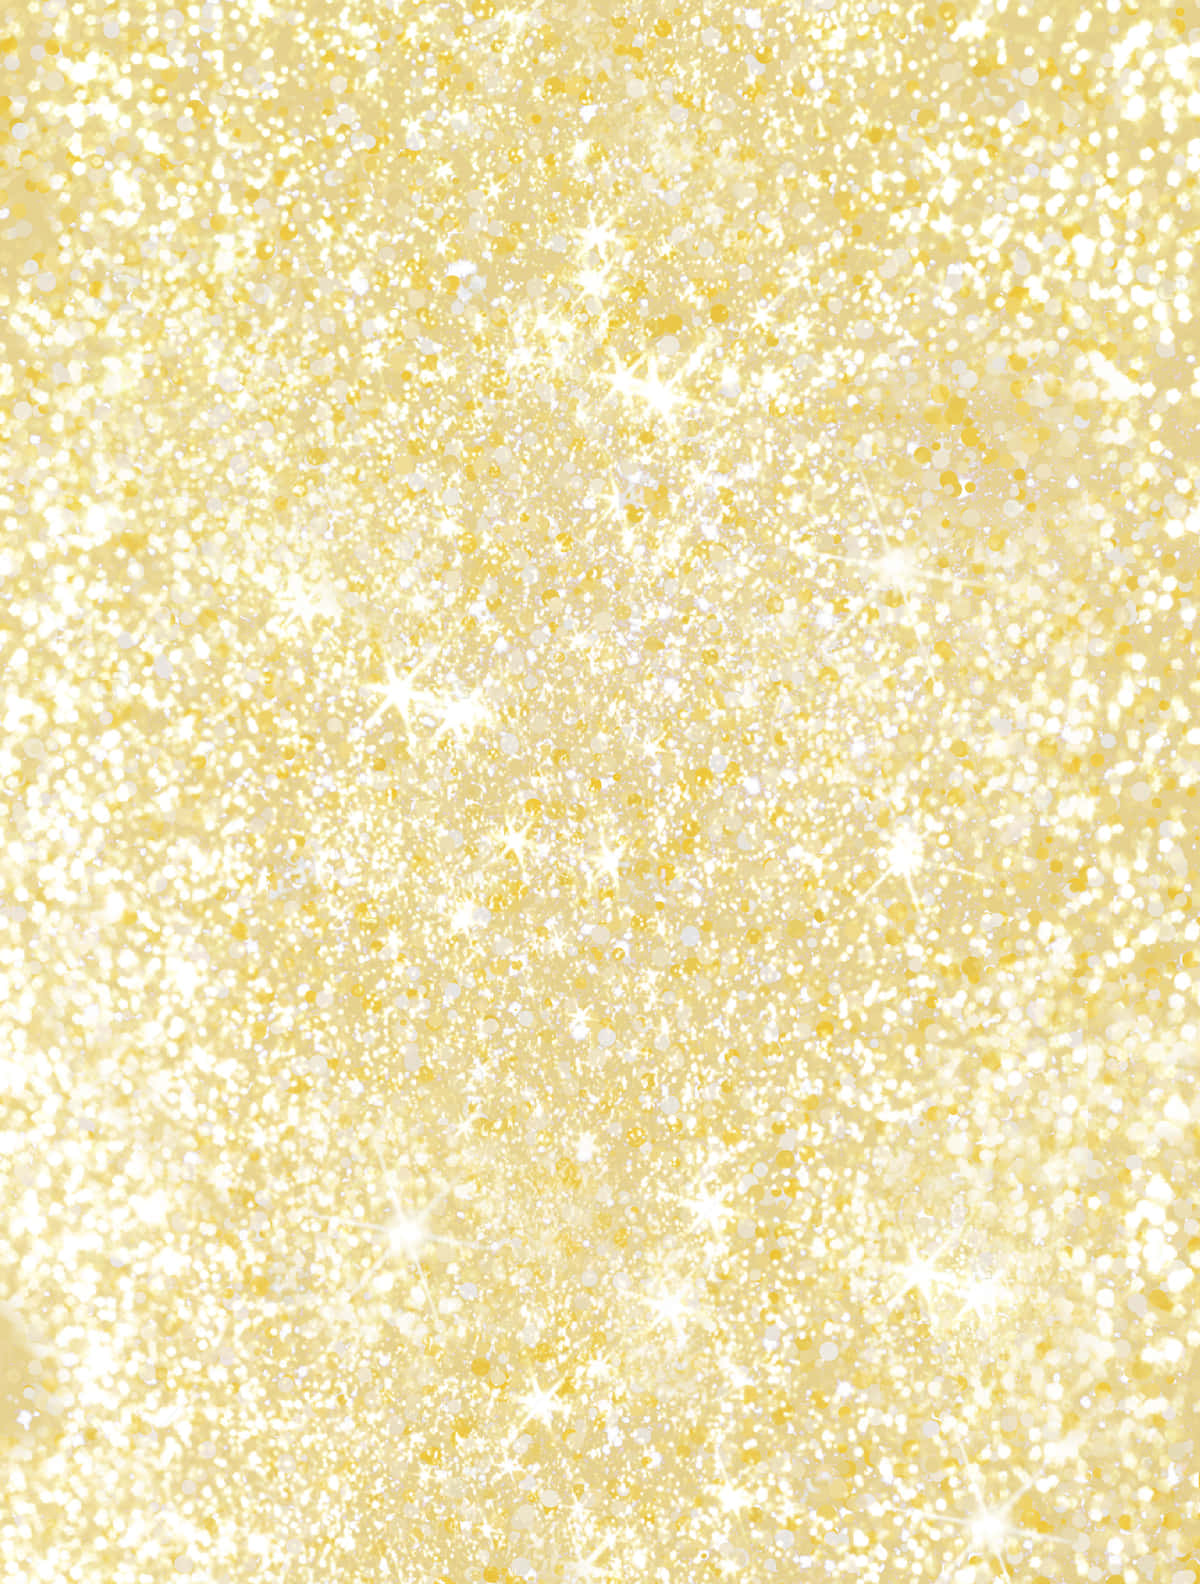 Illuminating, Sparkling Yellow Glitter Background